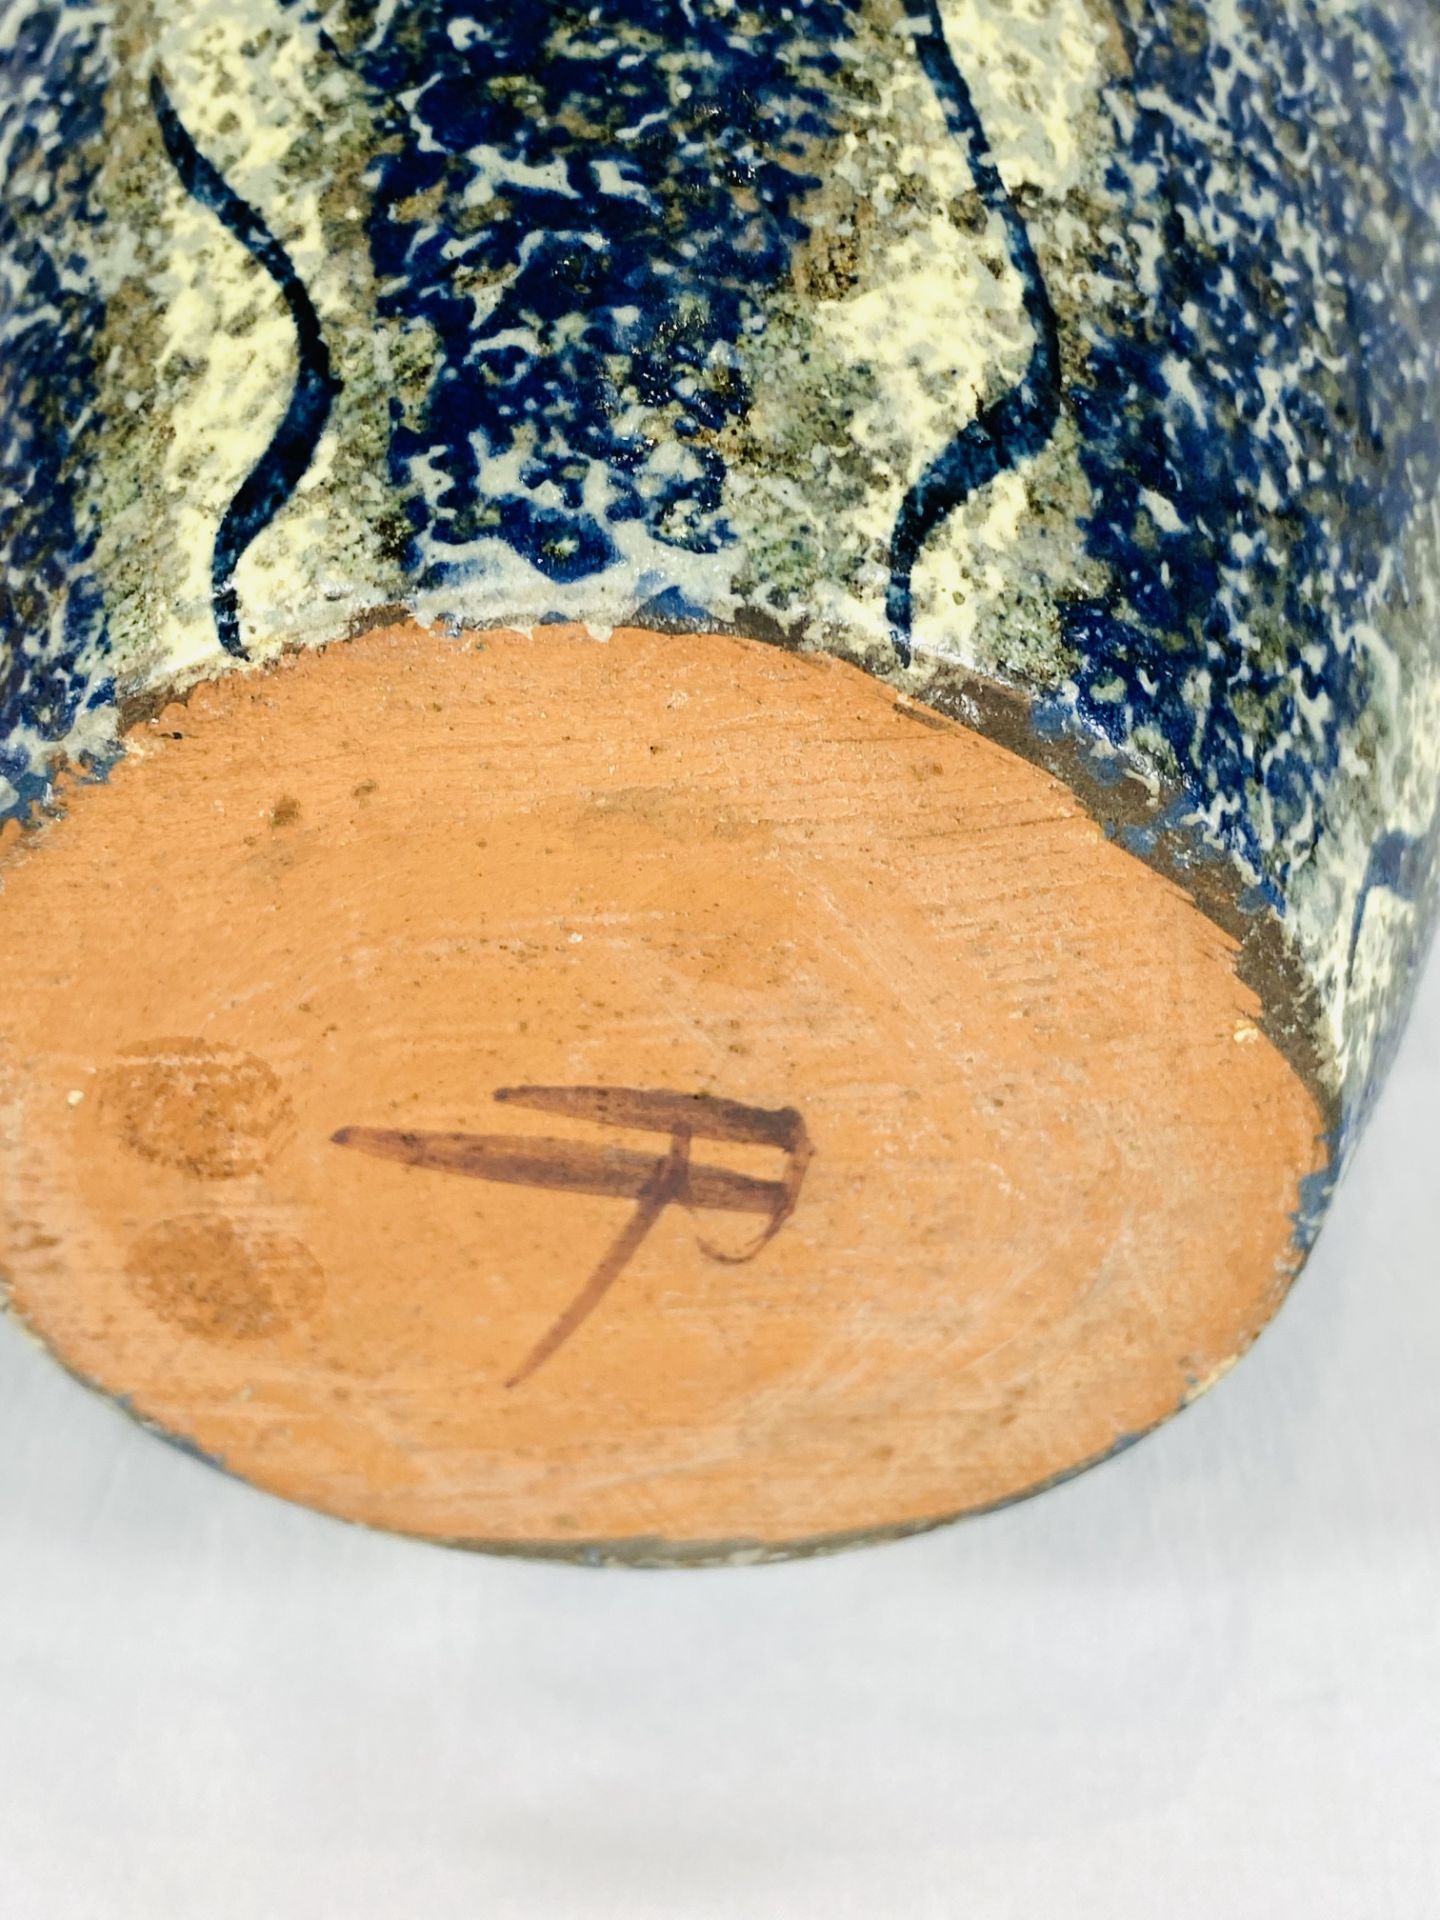 Studio pottery vase by Richard Phethean - Image 3 of 3